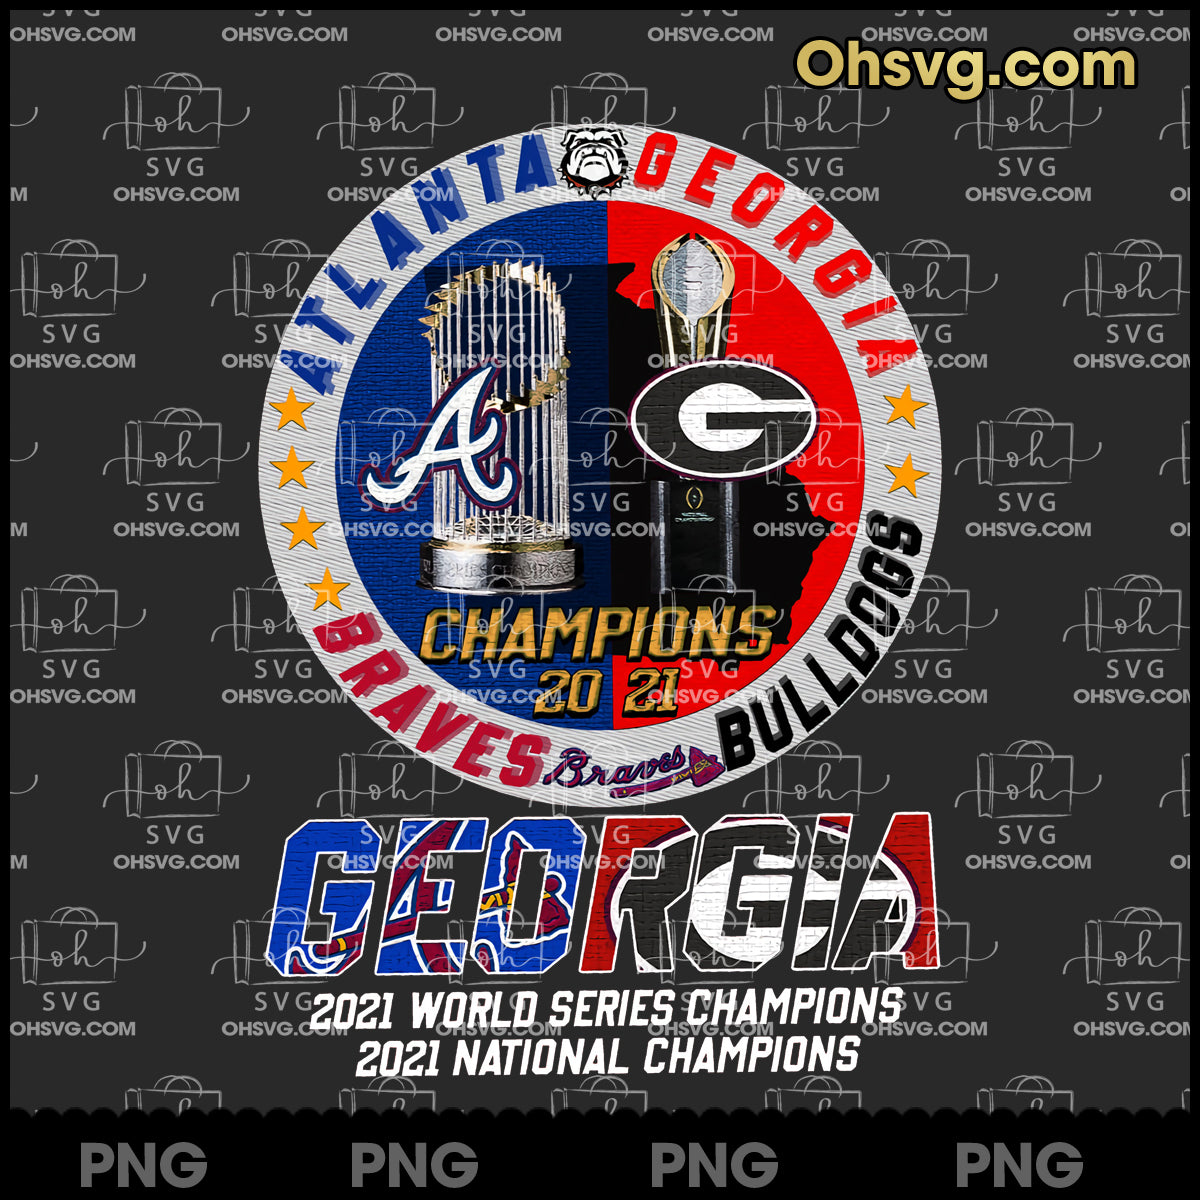 Georgia Bulldogs vs Atlanta Braves World Series Champions National